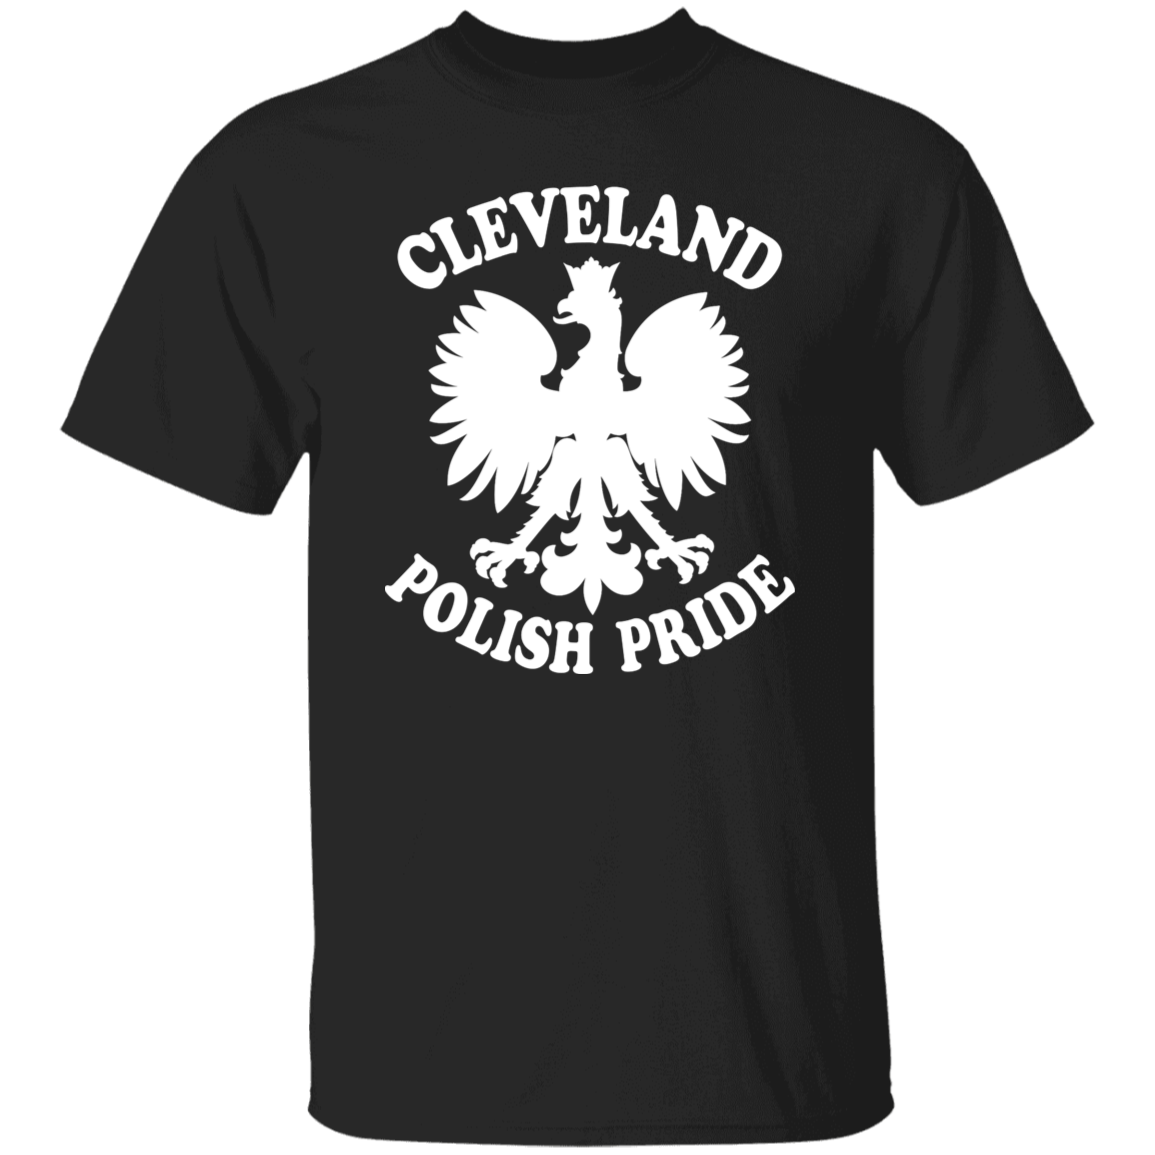 Cleveland Polish Pride Apparel CustomCat G500 5.3 oz. T-Shirt Black S